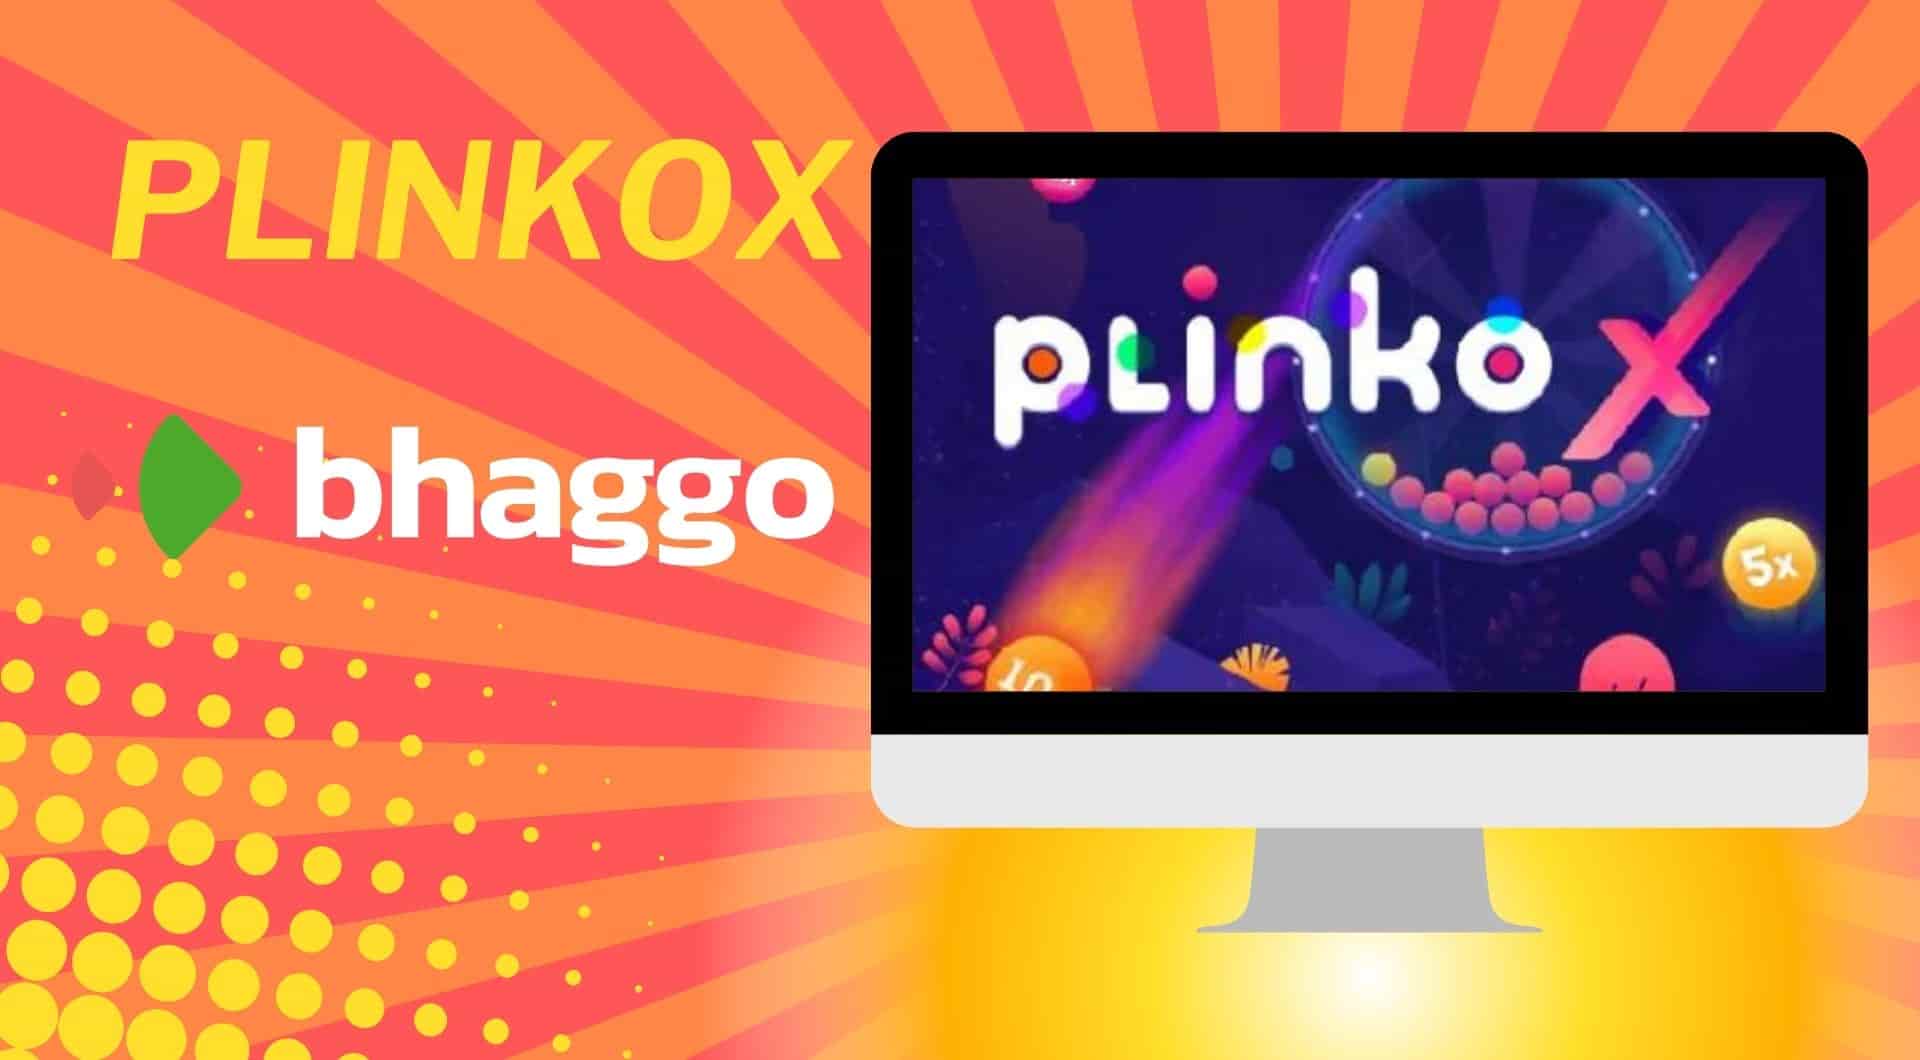 PlinkoX casino game information in Bangladesh